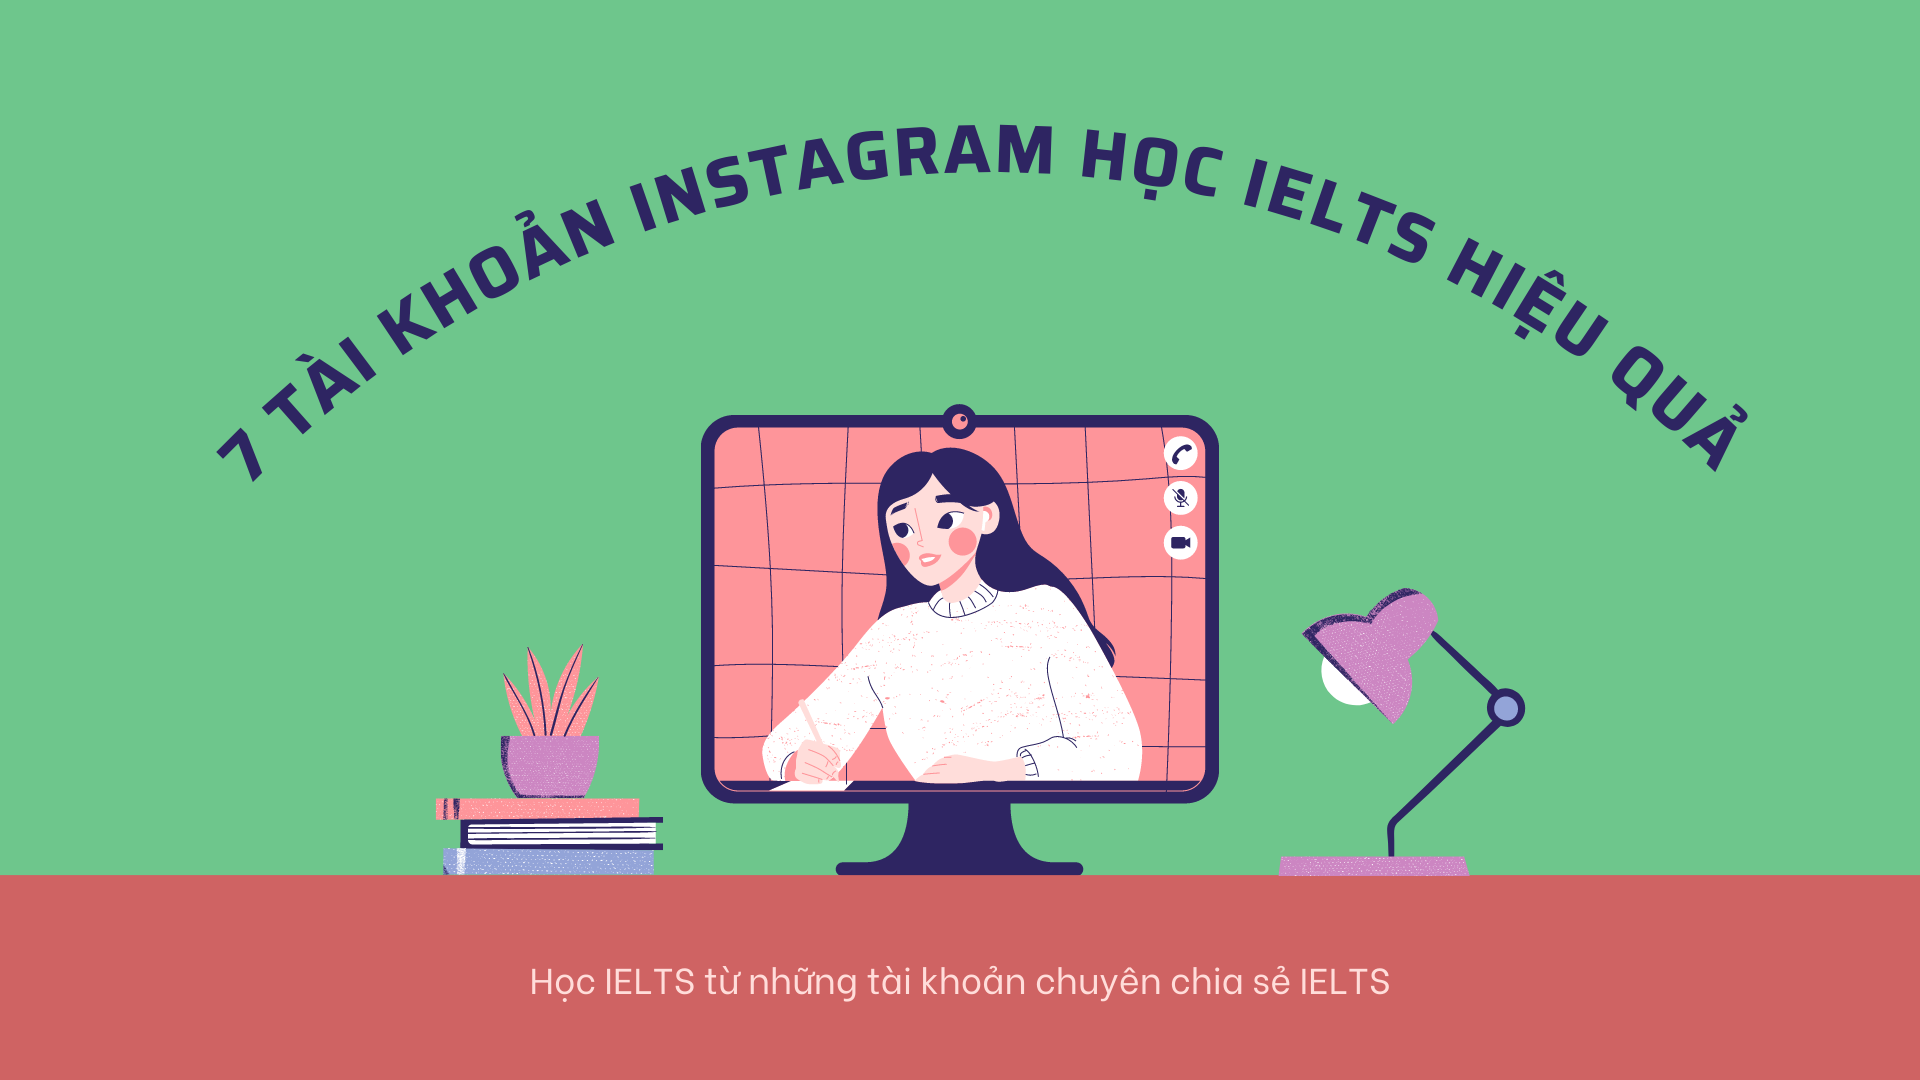 Tuyệt Chiêu Học IELTS Qua Instagram Hiệu Quả 